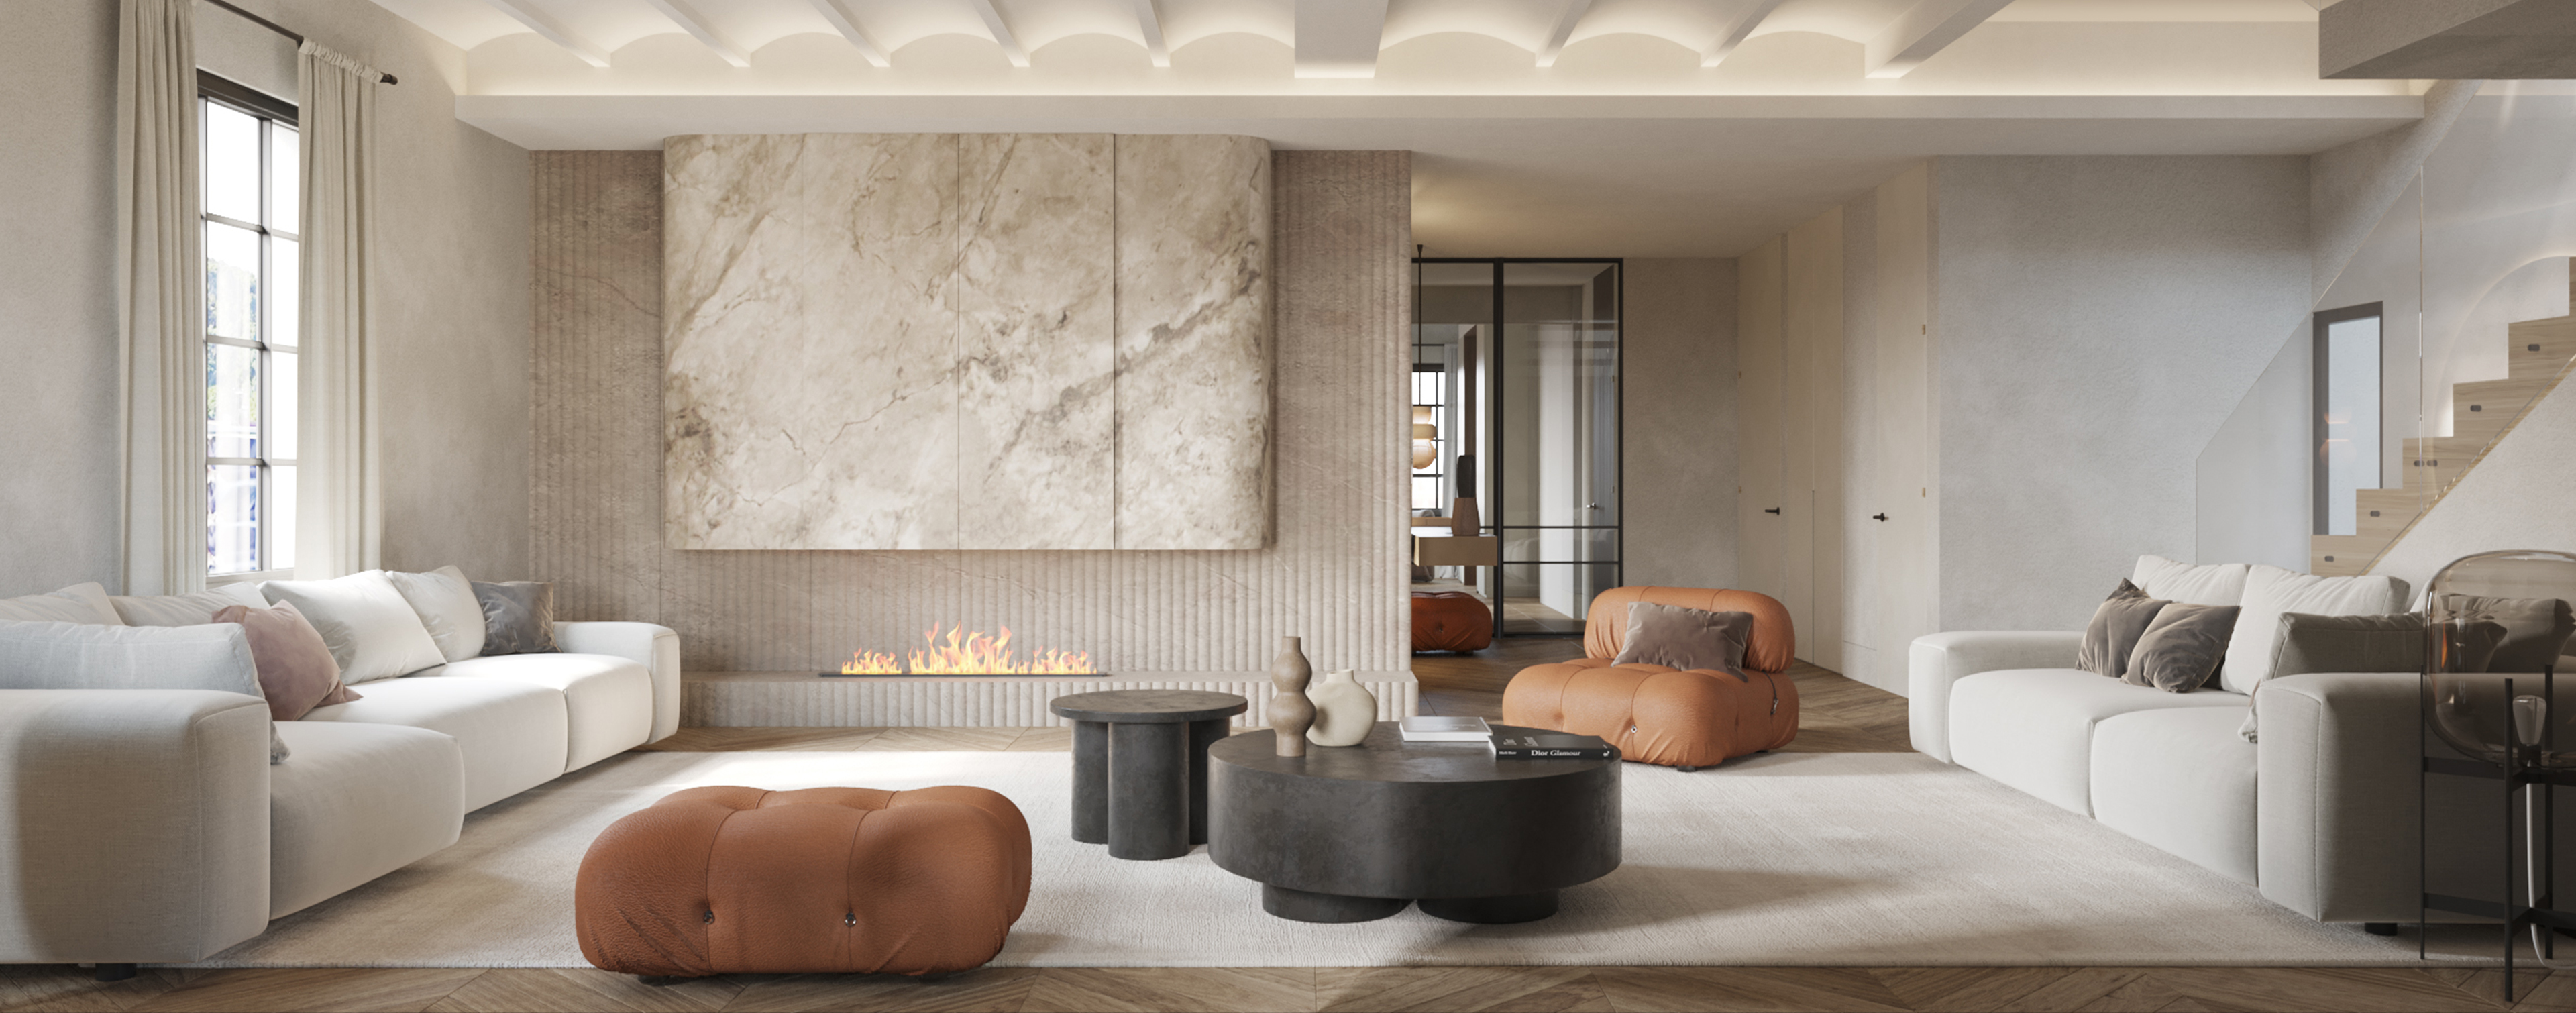 luv studio luxury architects barcelona pedralbes penthouse IMG 01 - LUV Studio - Architecture et design - Barcelone